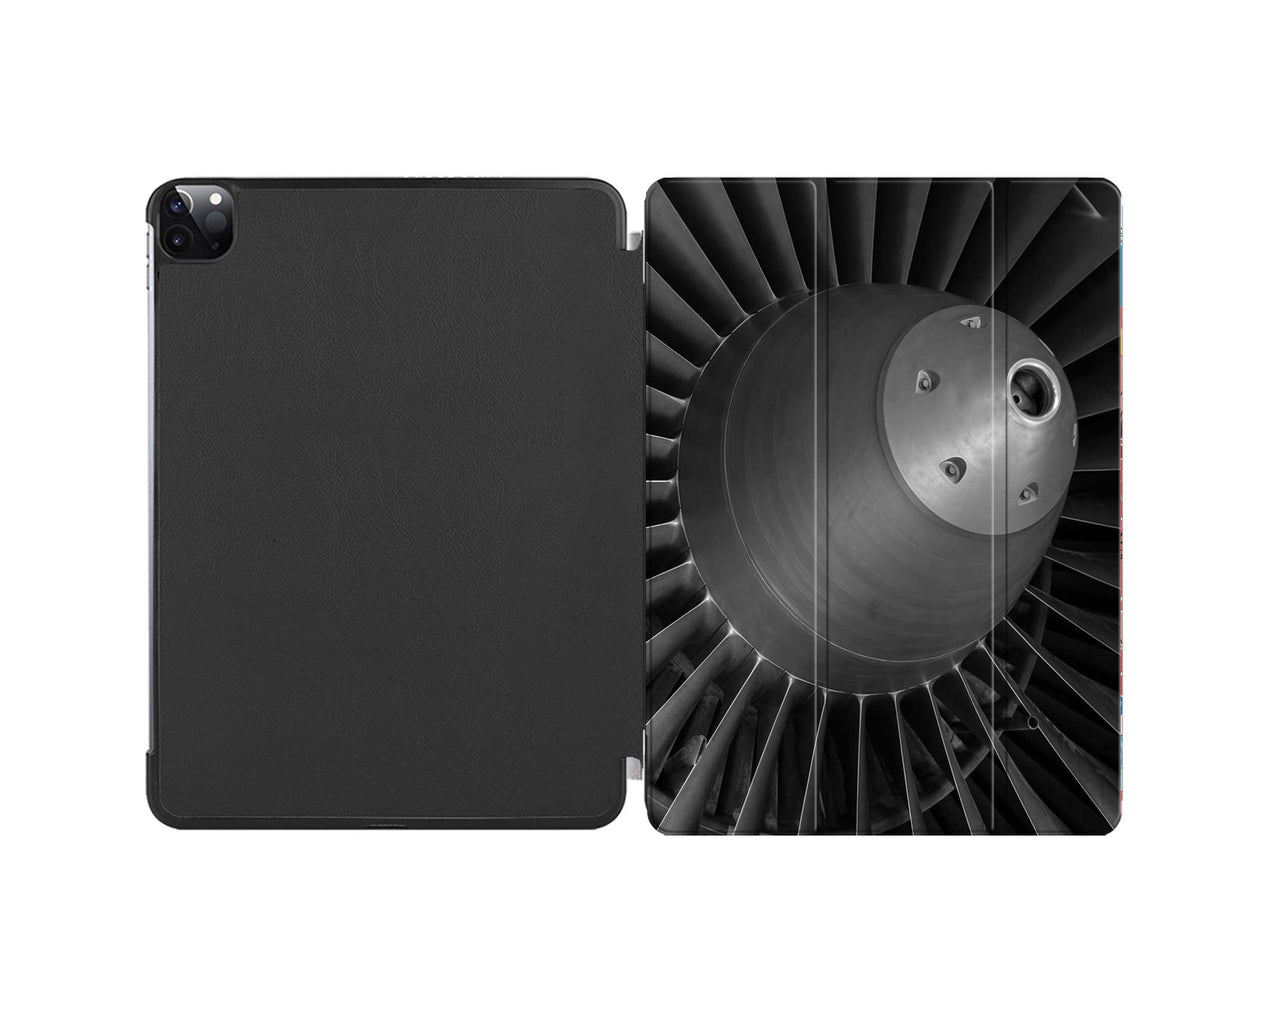 Super View of Jet Engine Designed iPad Cases